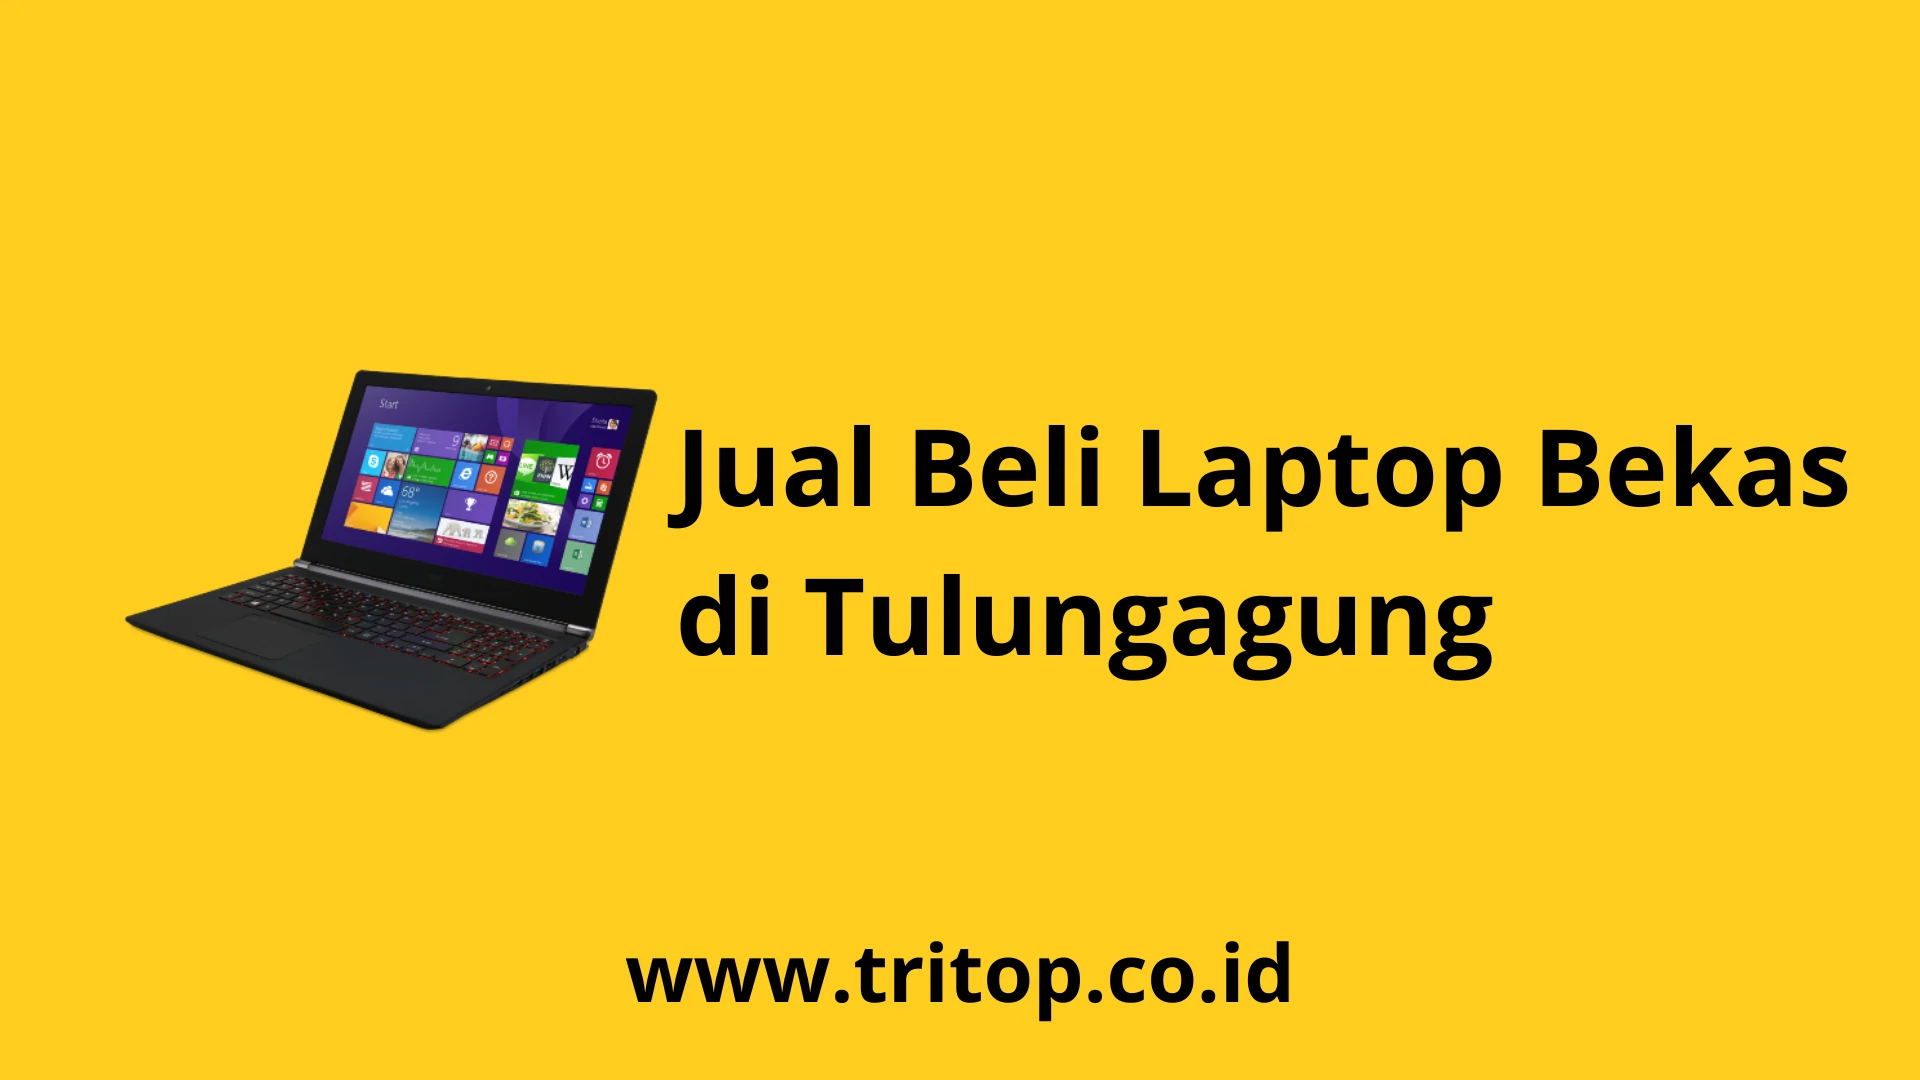 Jual Beli Laptop Bekas Tulungagung Tritop.co.id